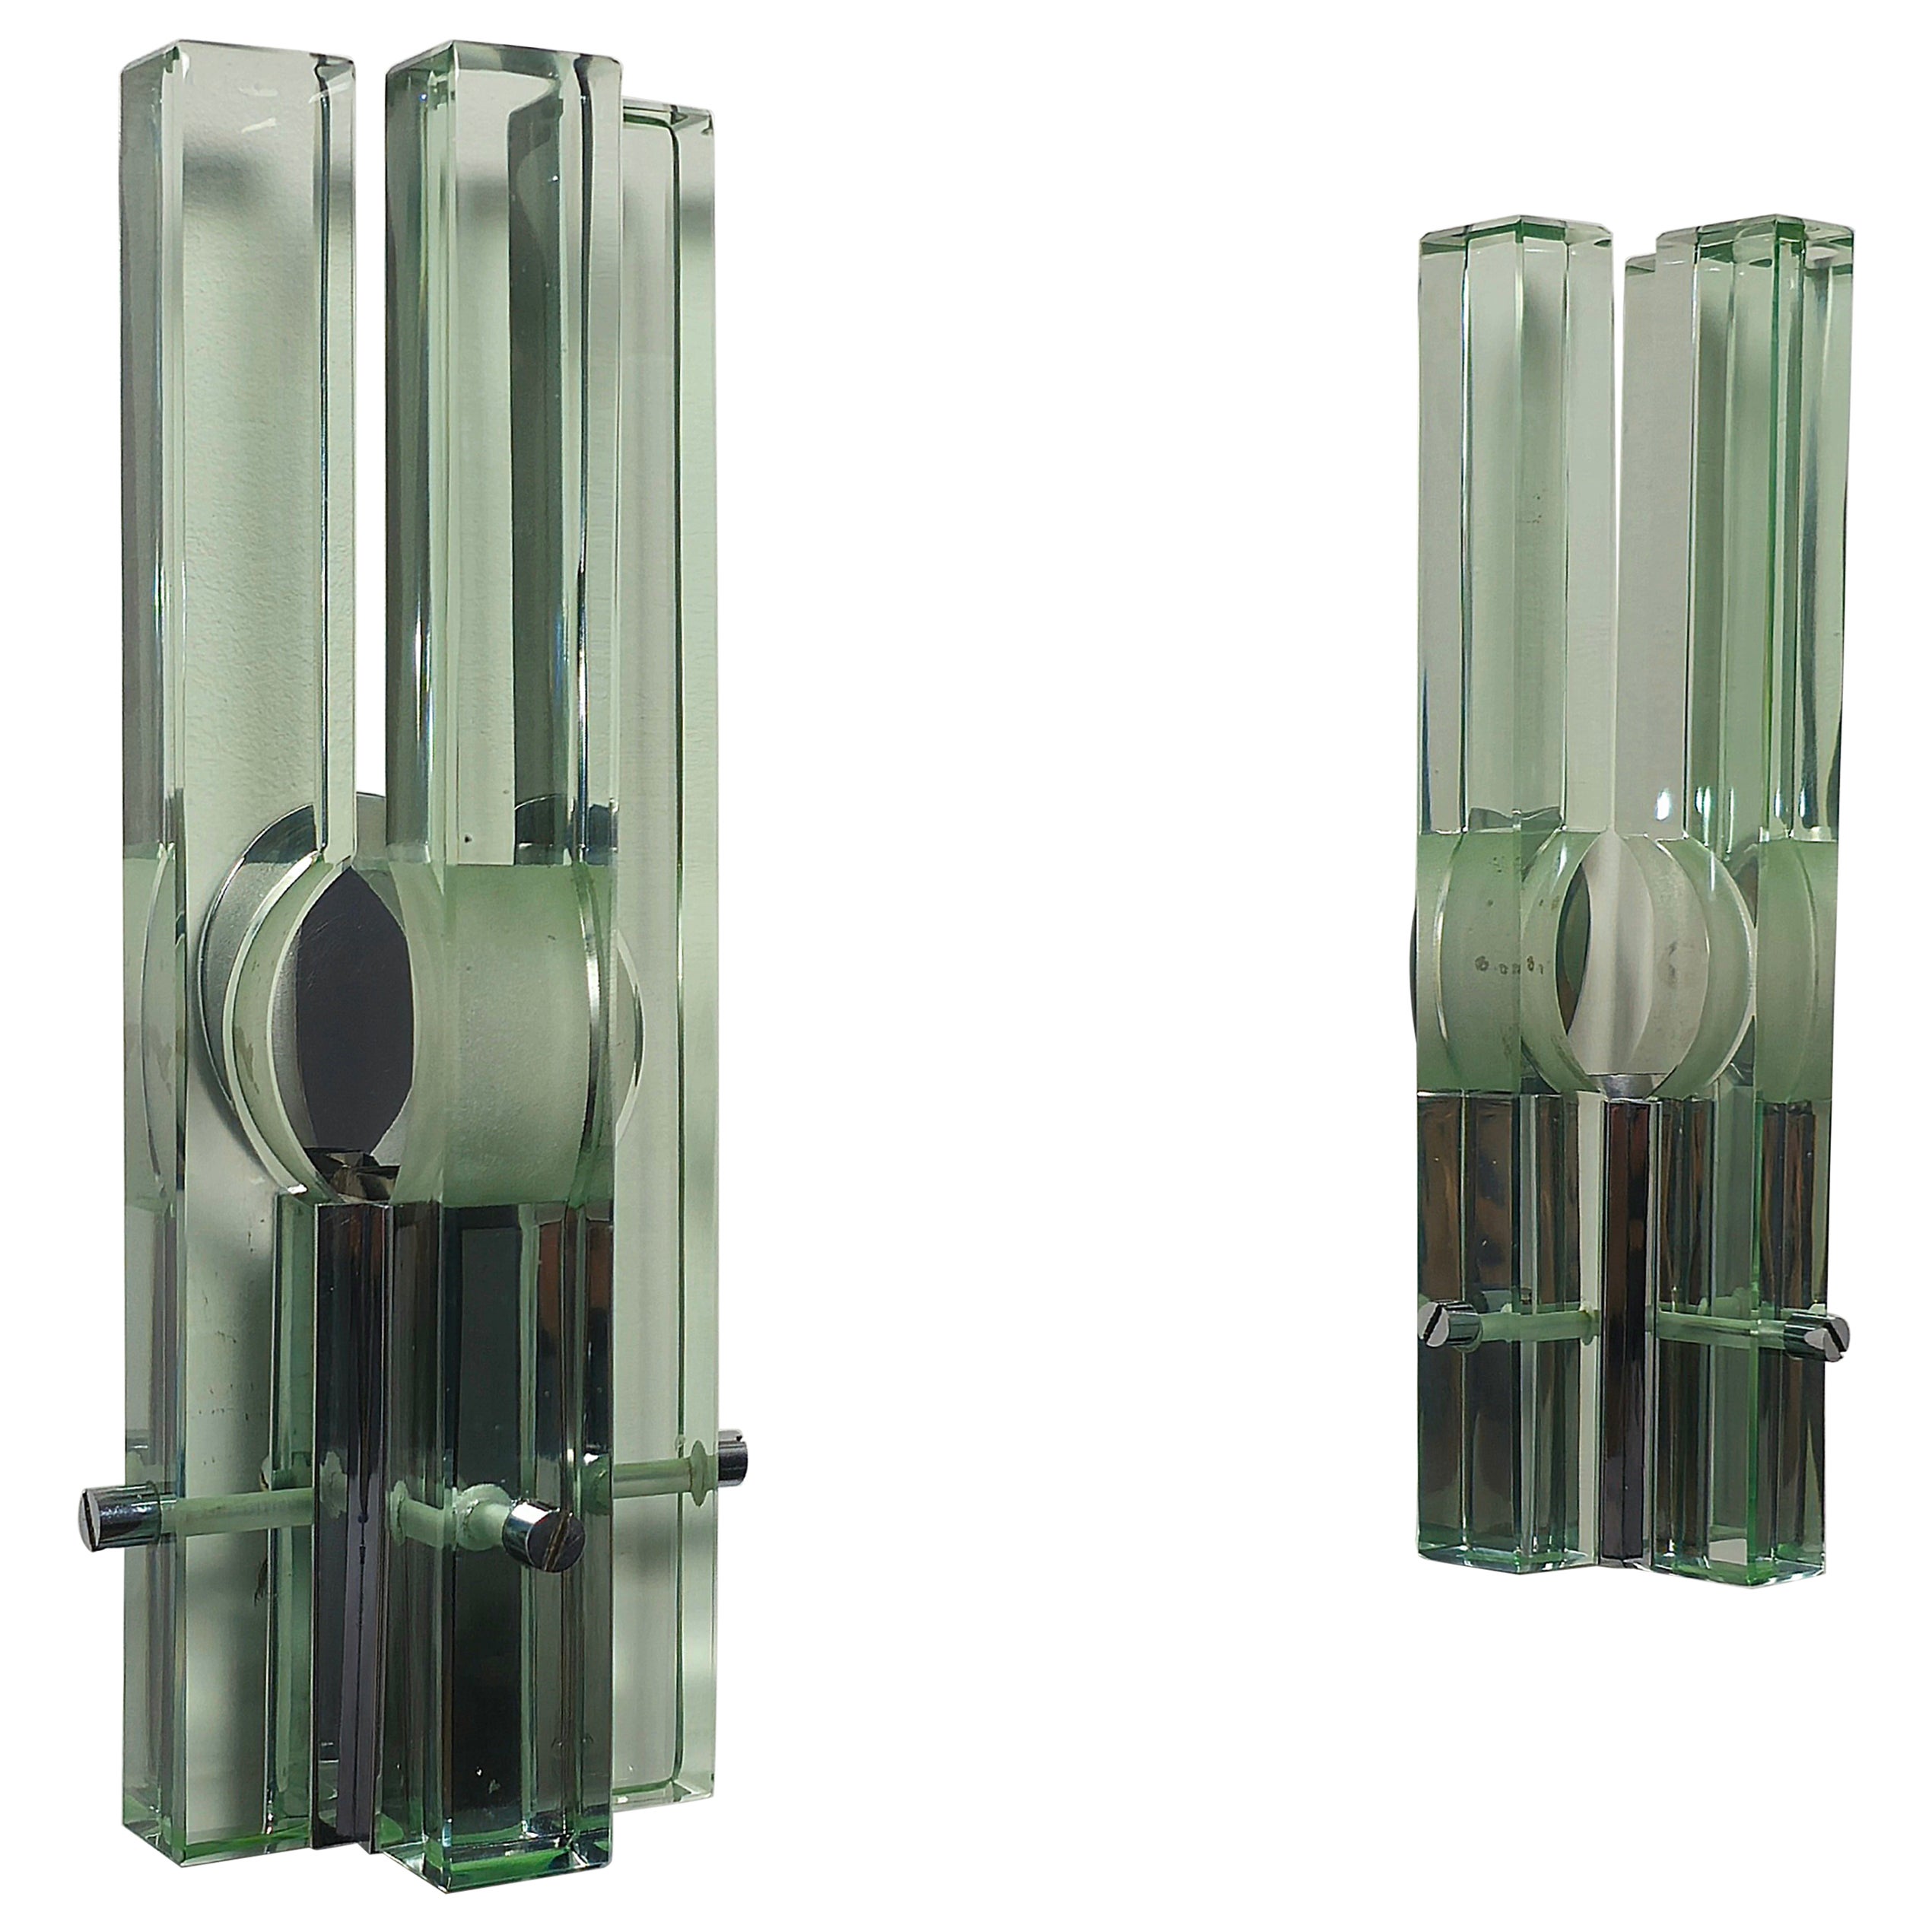 Pair of Wall Lights Sconces Crystal Glass Brass Gallotti e Radice Midcentury 70s